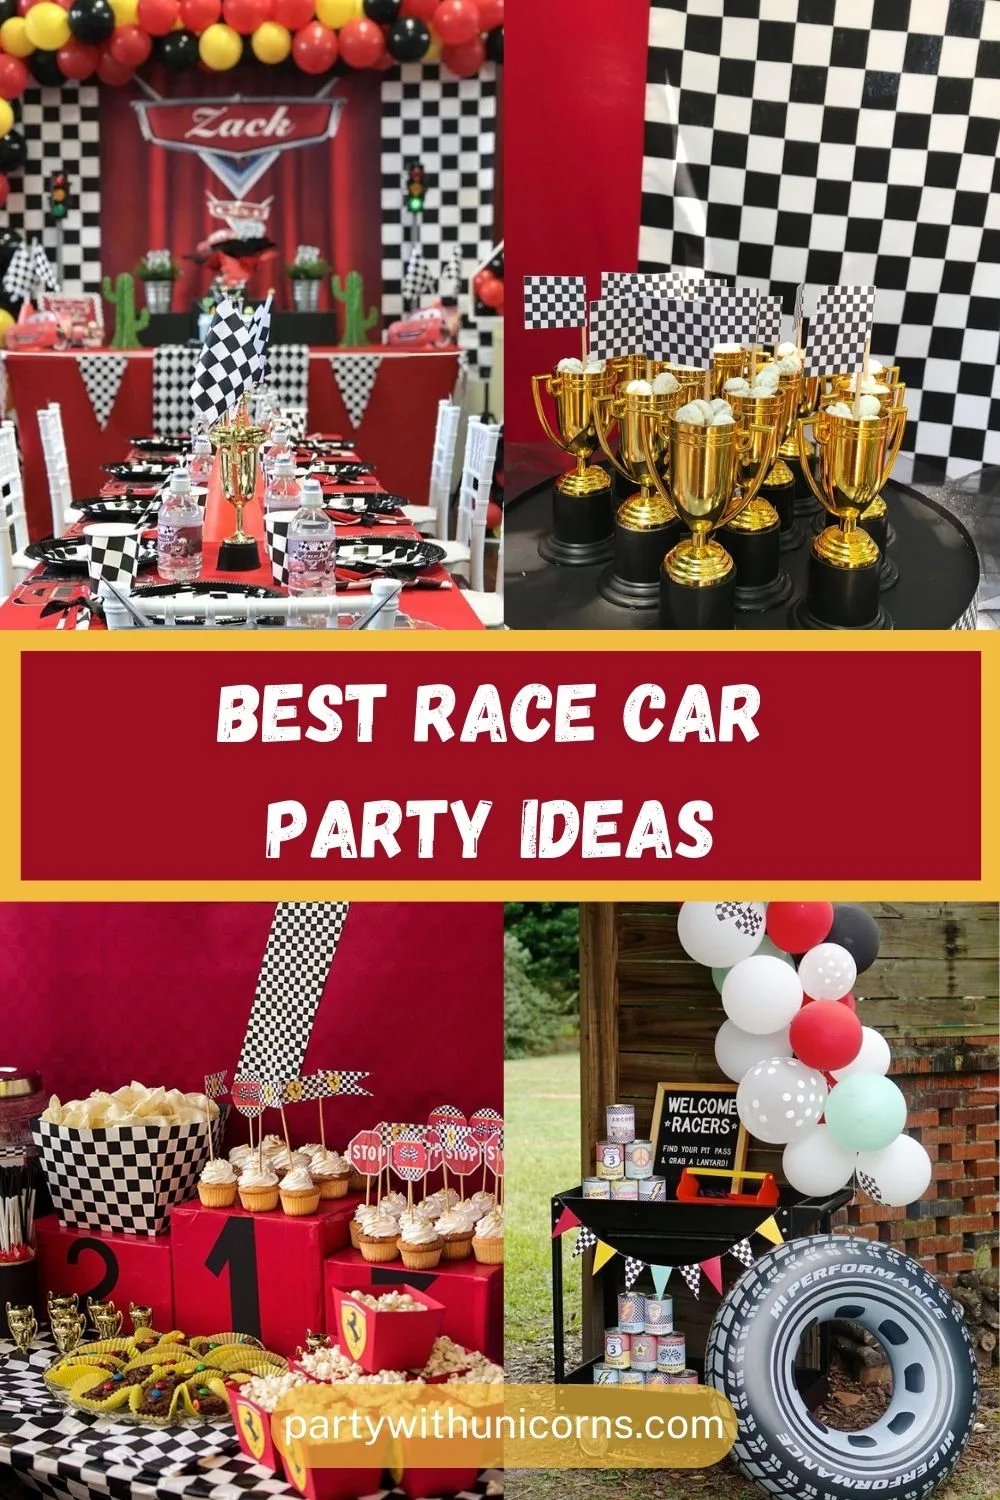 40 Best Race Car Party Ideas - Party with Unicorns